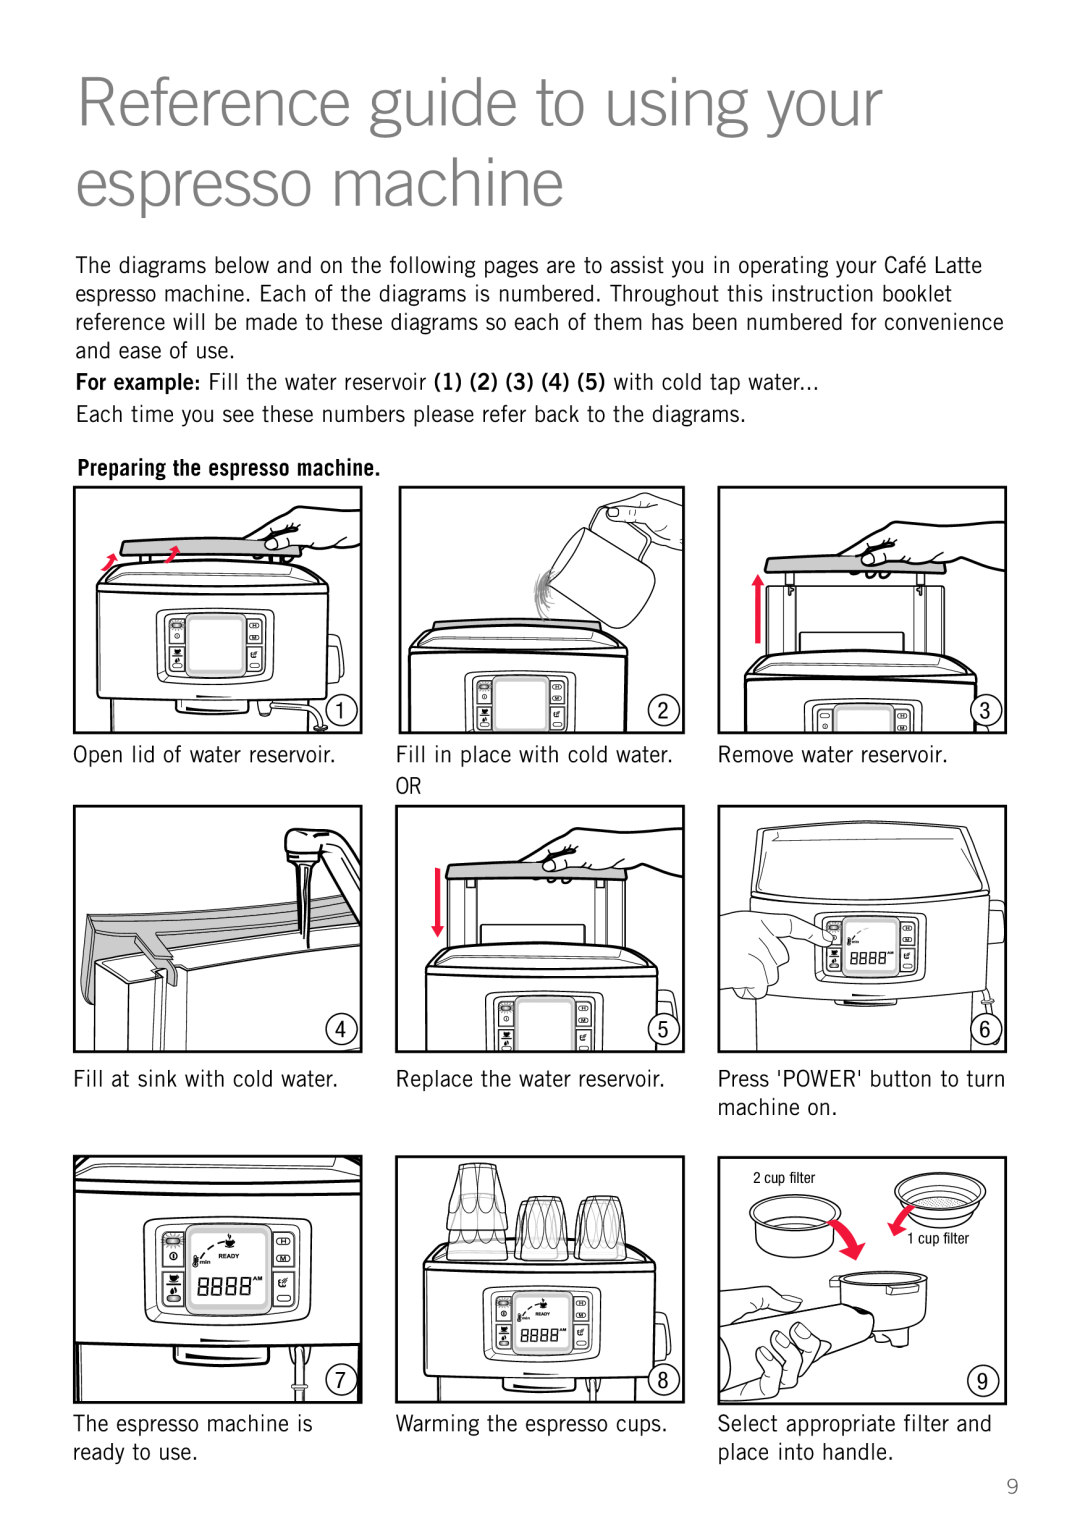 Sunbeam EM5600 manual Reference guide to using your espresso machine, Preparing the espresso machine 